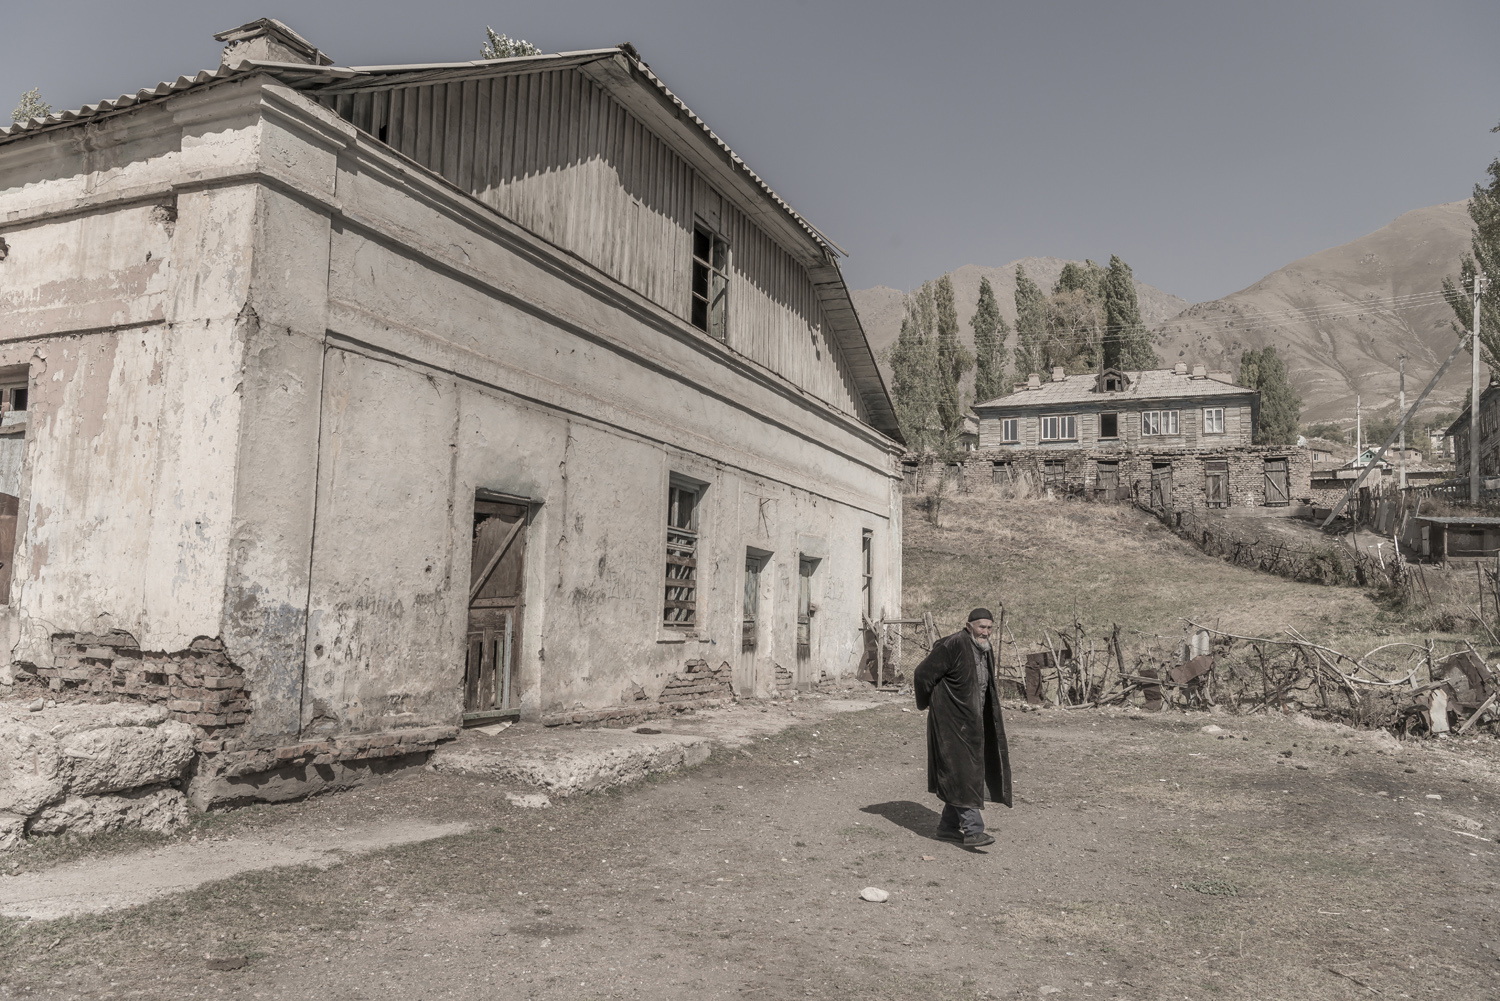 min-kush-soviet-uranium-mining-town-industrial-Russia-Kyrgyzstan-ruins-soviet-sign-jo-kearney-photos-video-photography-old-man-abandoned-town.jpg